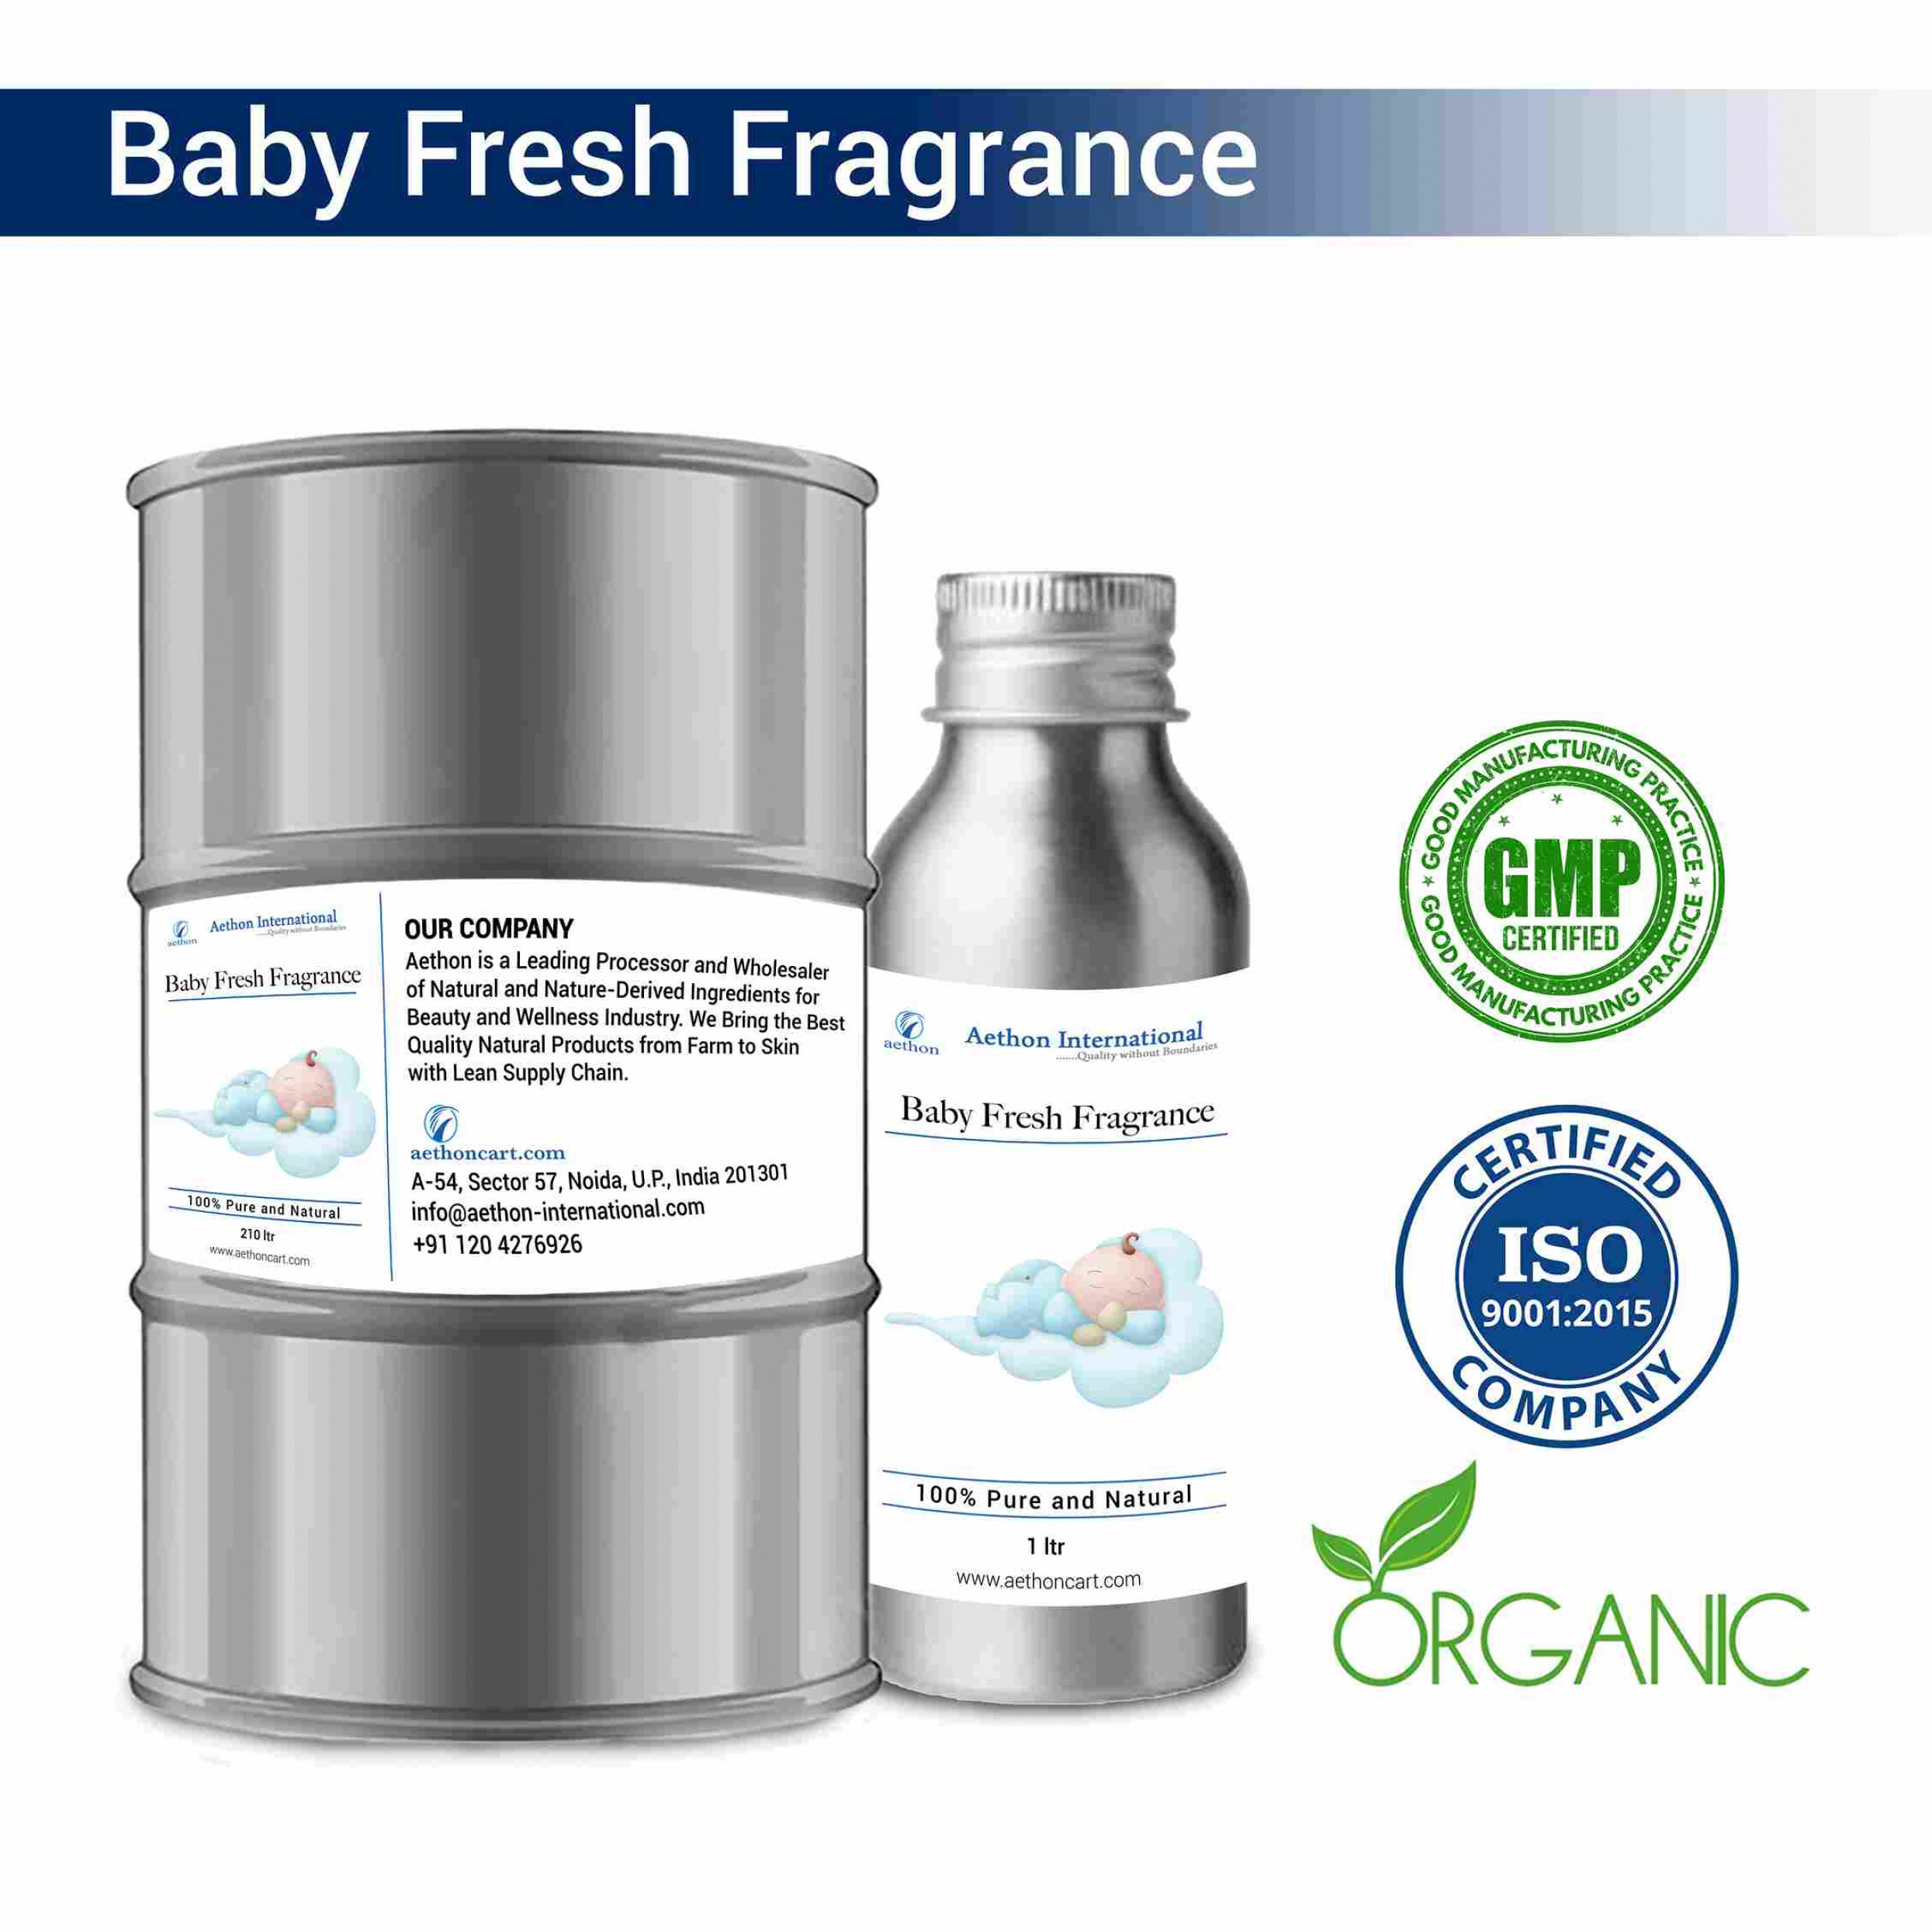 Baby Fresh Fragrance